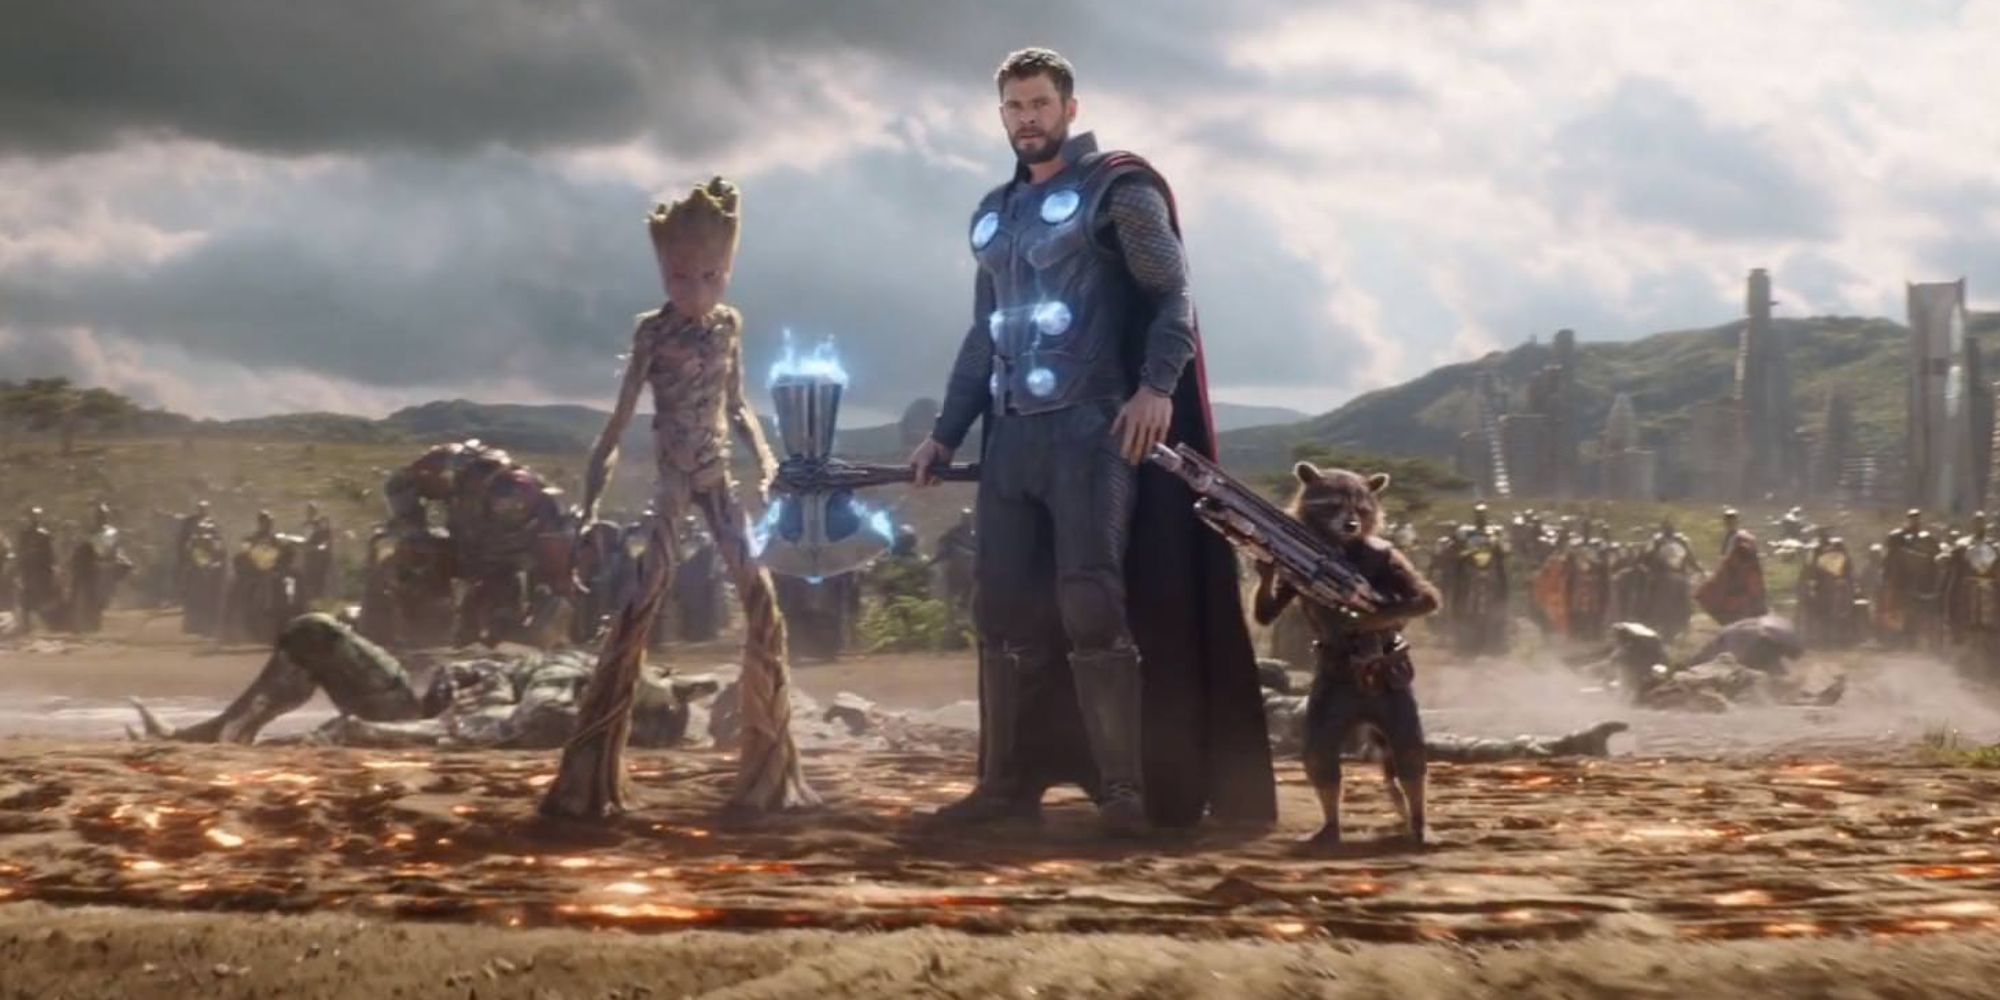 Chris Hemsworth as Thor, holding stormbreaker alongside Groot and Rocket in Avengers: Infinity War